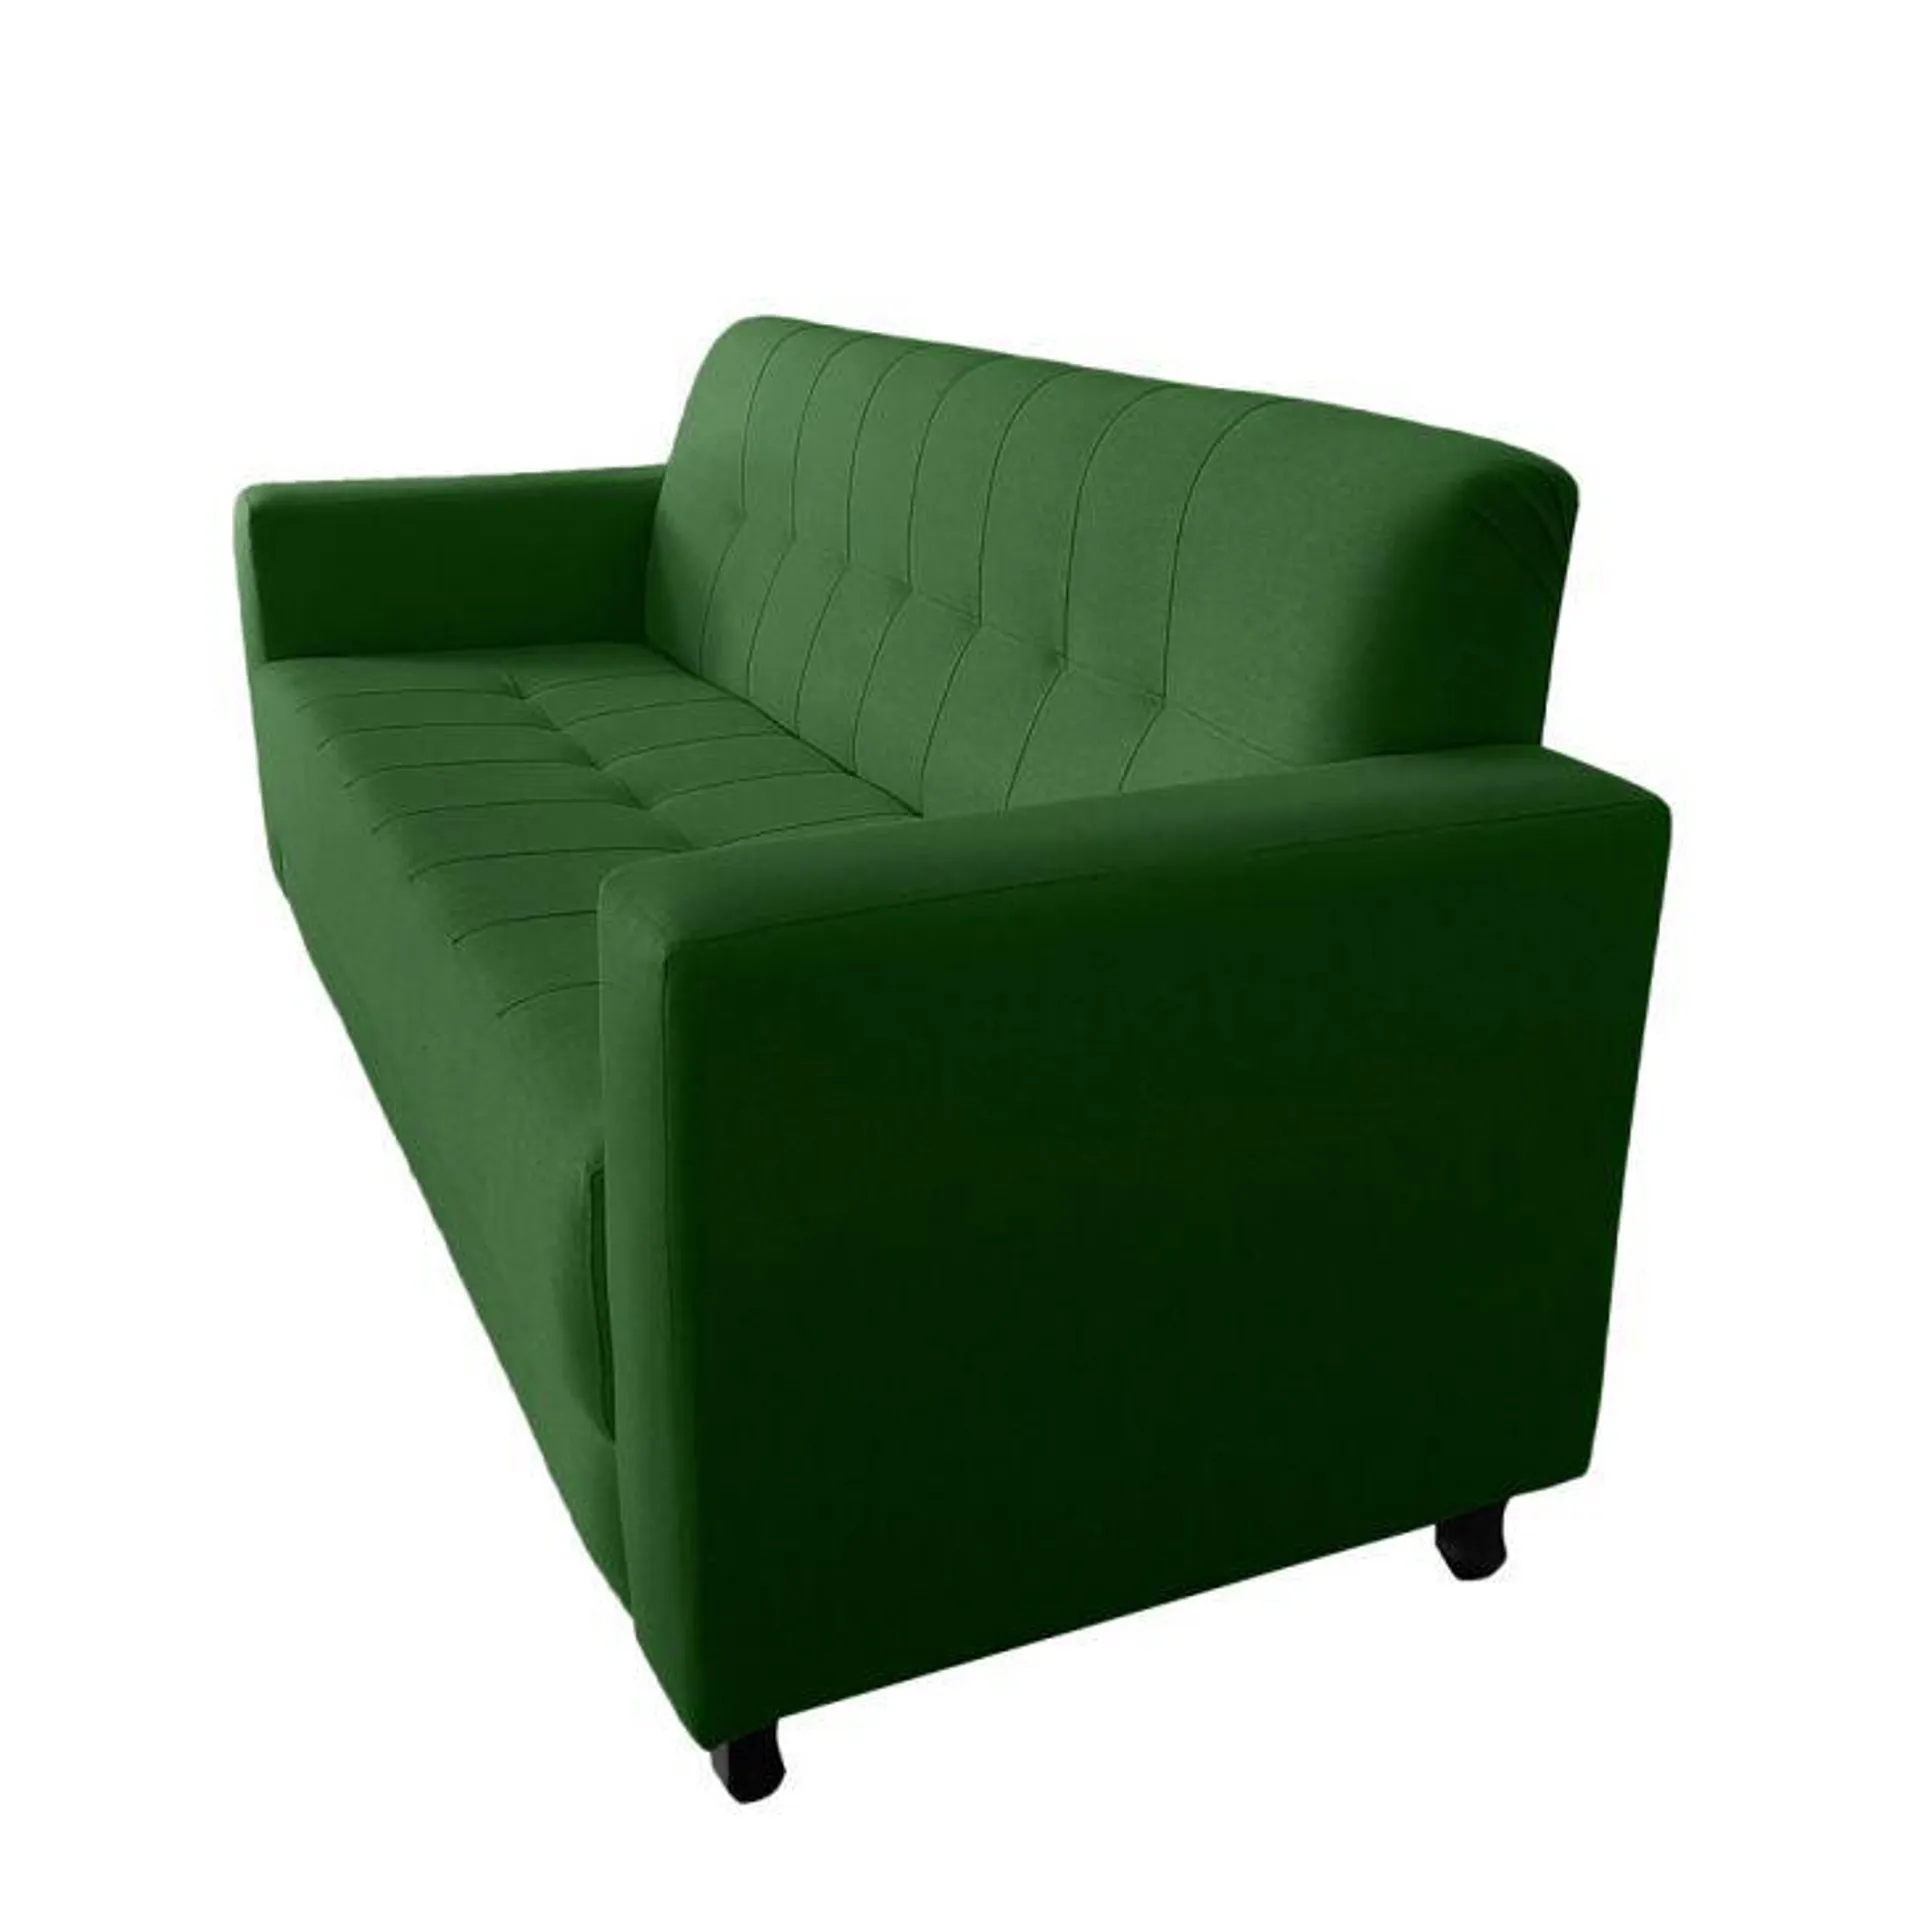 Sofa Elegance 3 Lugares Suede Verde - Lares Decor